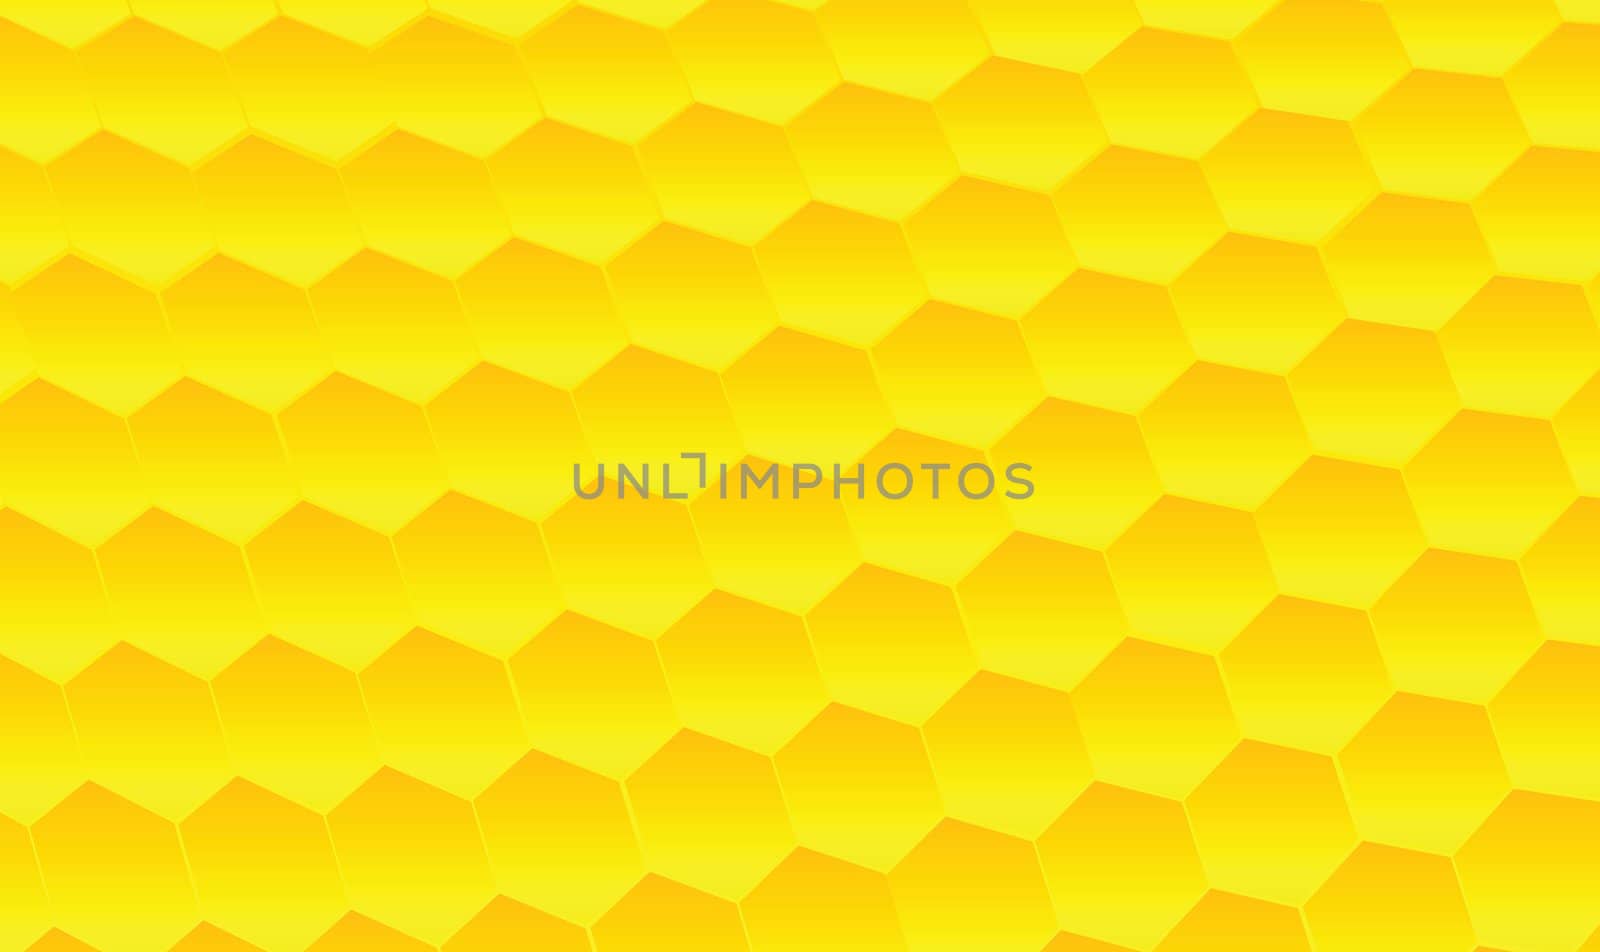 Honeycomb design by Lirch